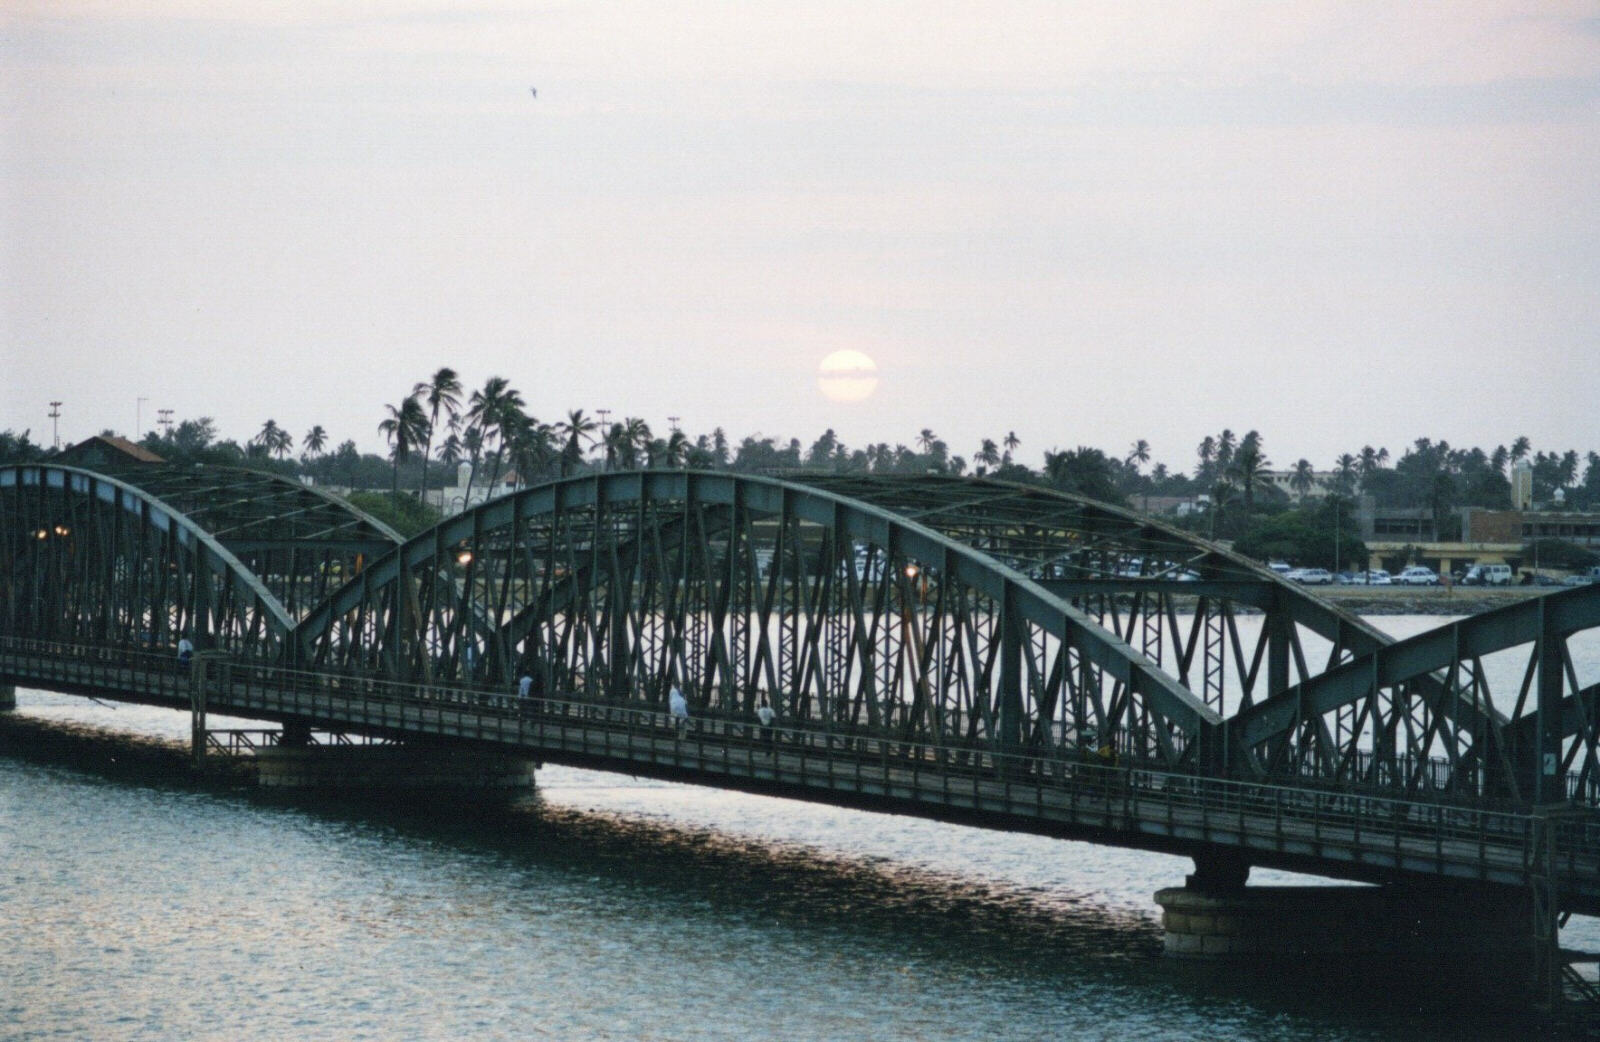 Faintherbe bridge over the Senegal river in St Louis